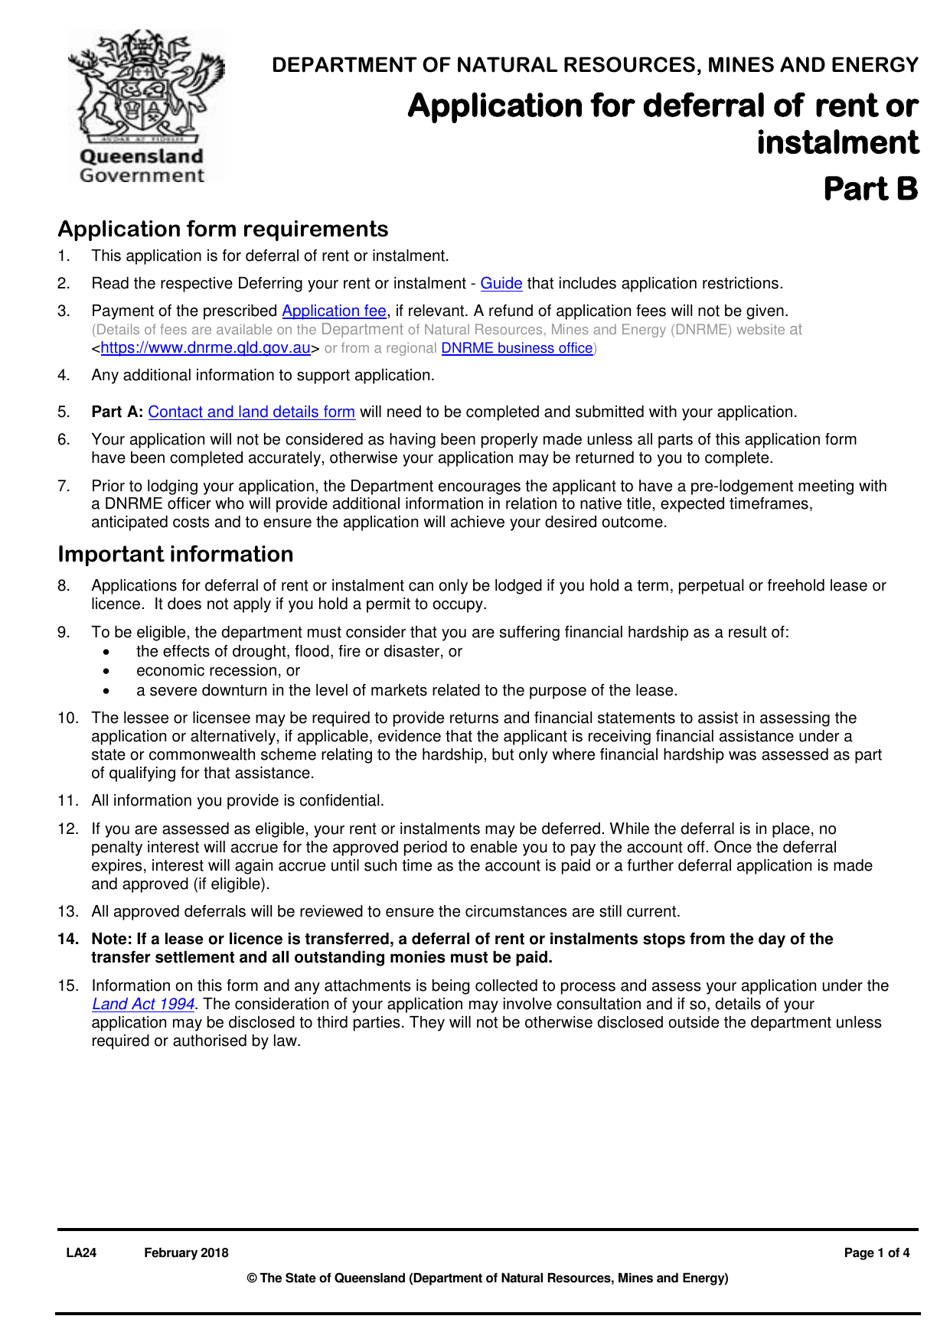 Form LA24 Part B Application for Deferral of Rent or Instalment - Queensland, Australia, Page 1